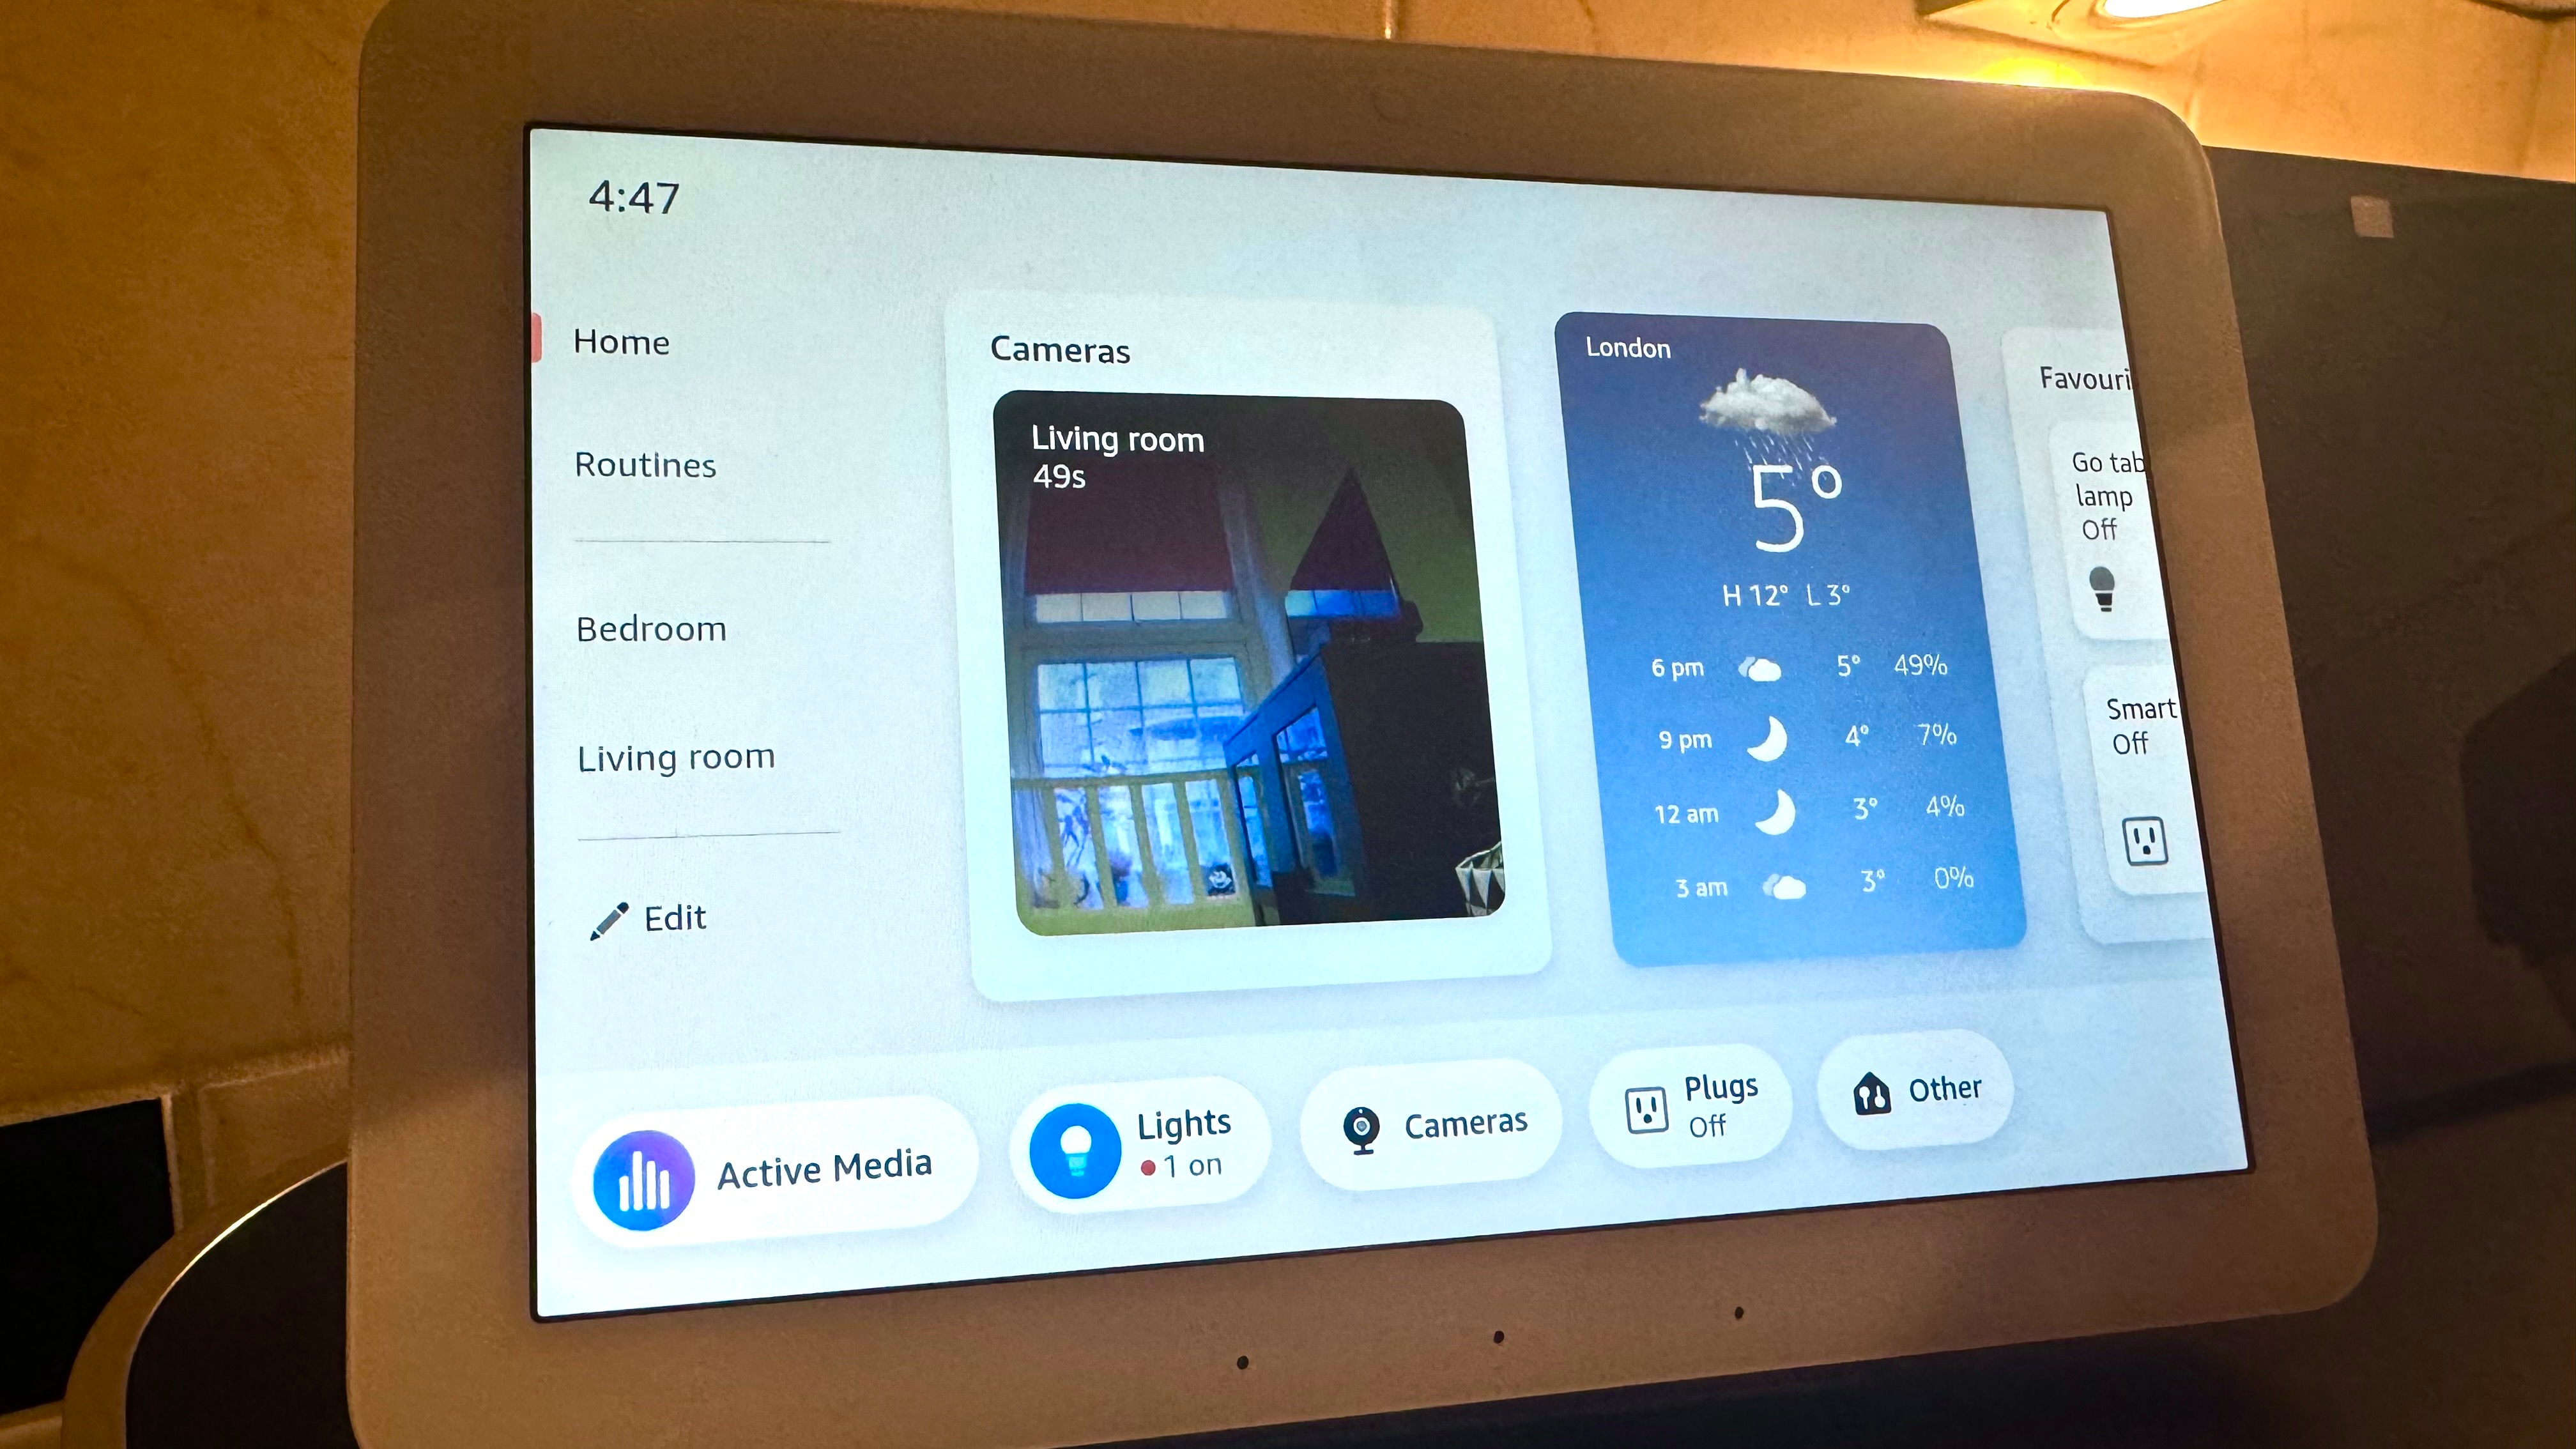 s new Echo Pop makes sense if you already use Alexa-enabled devices